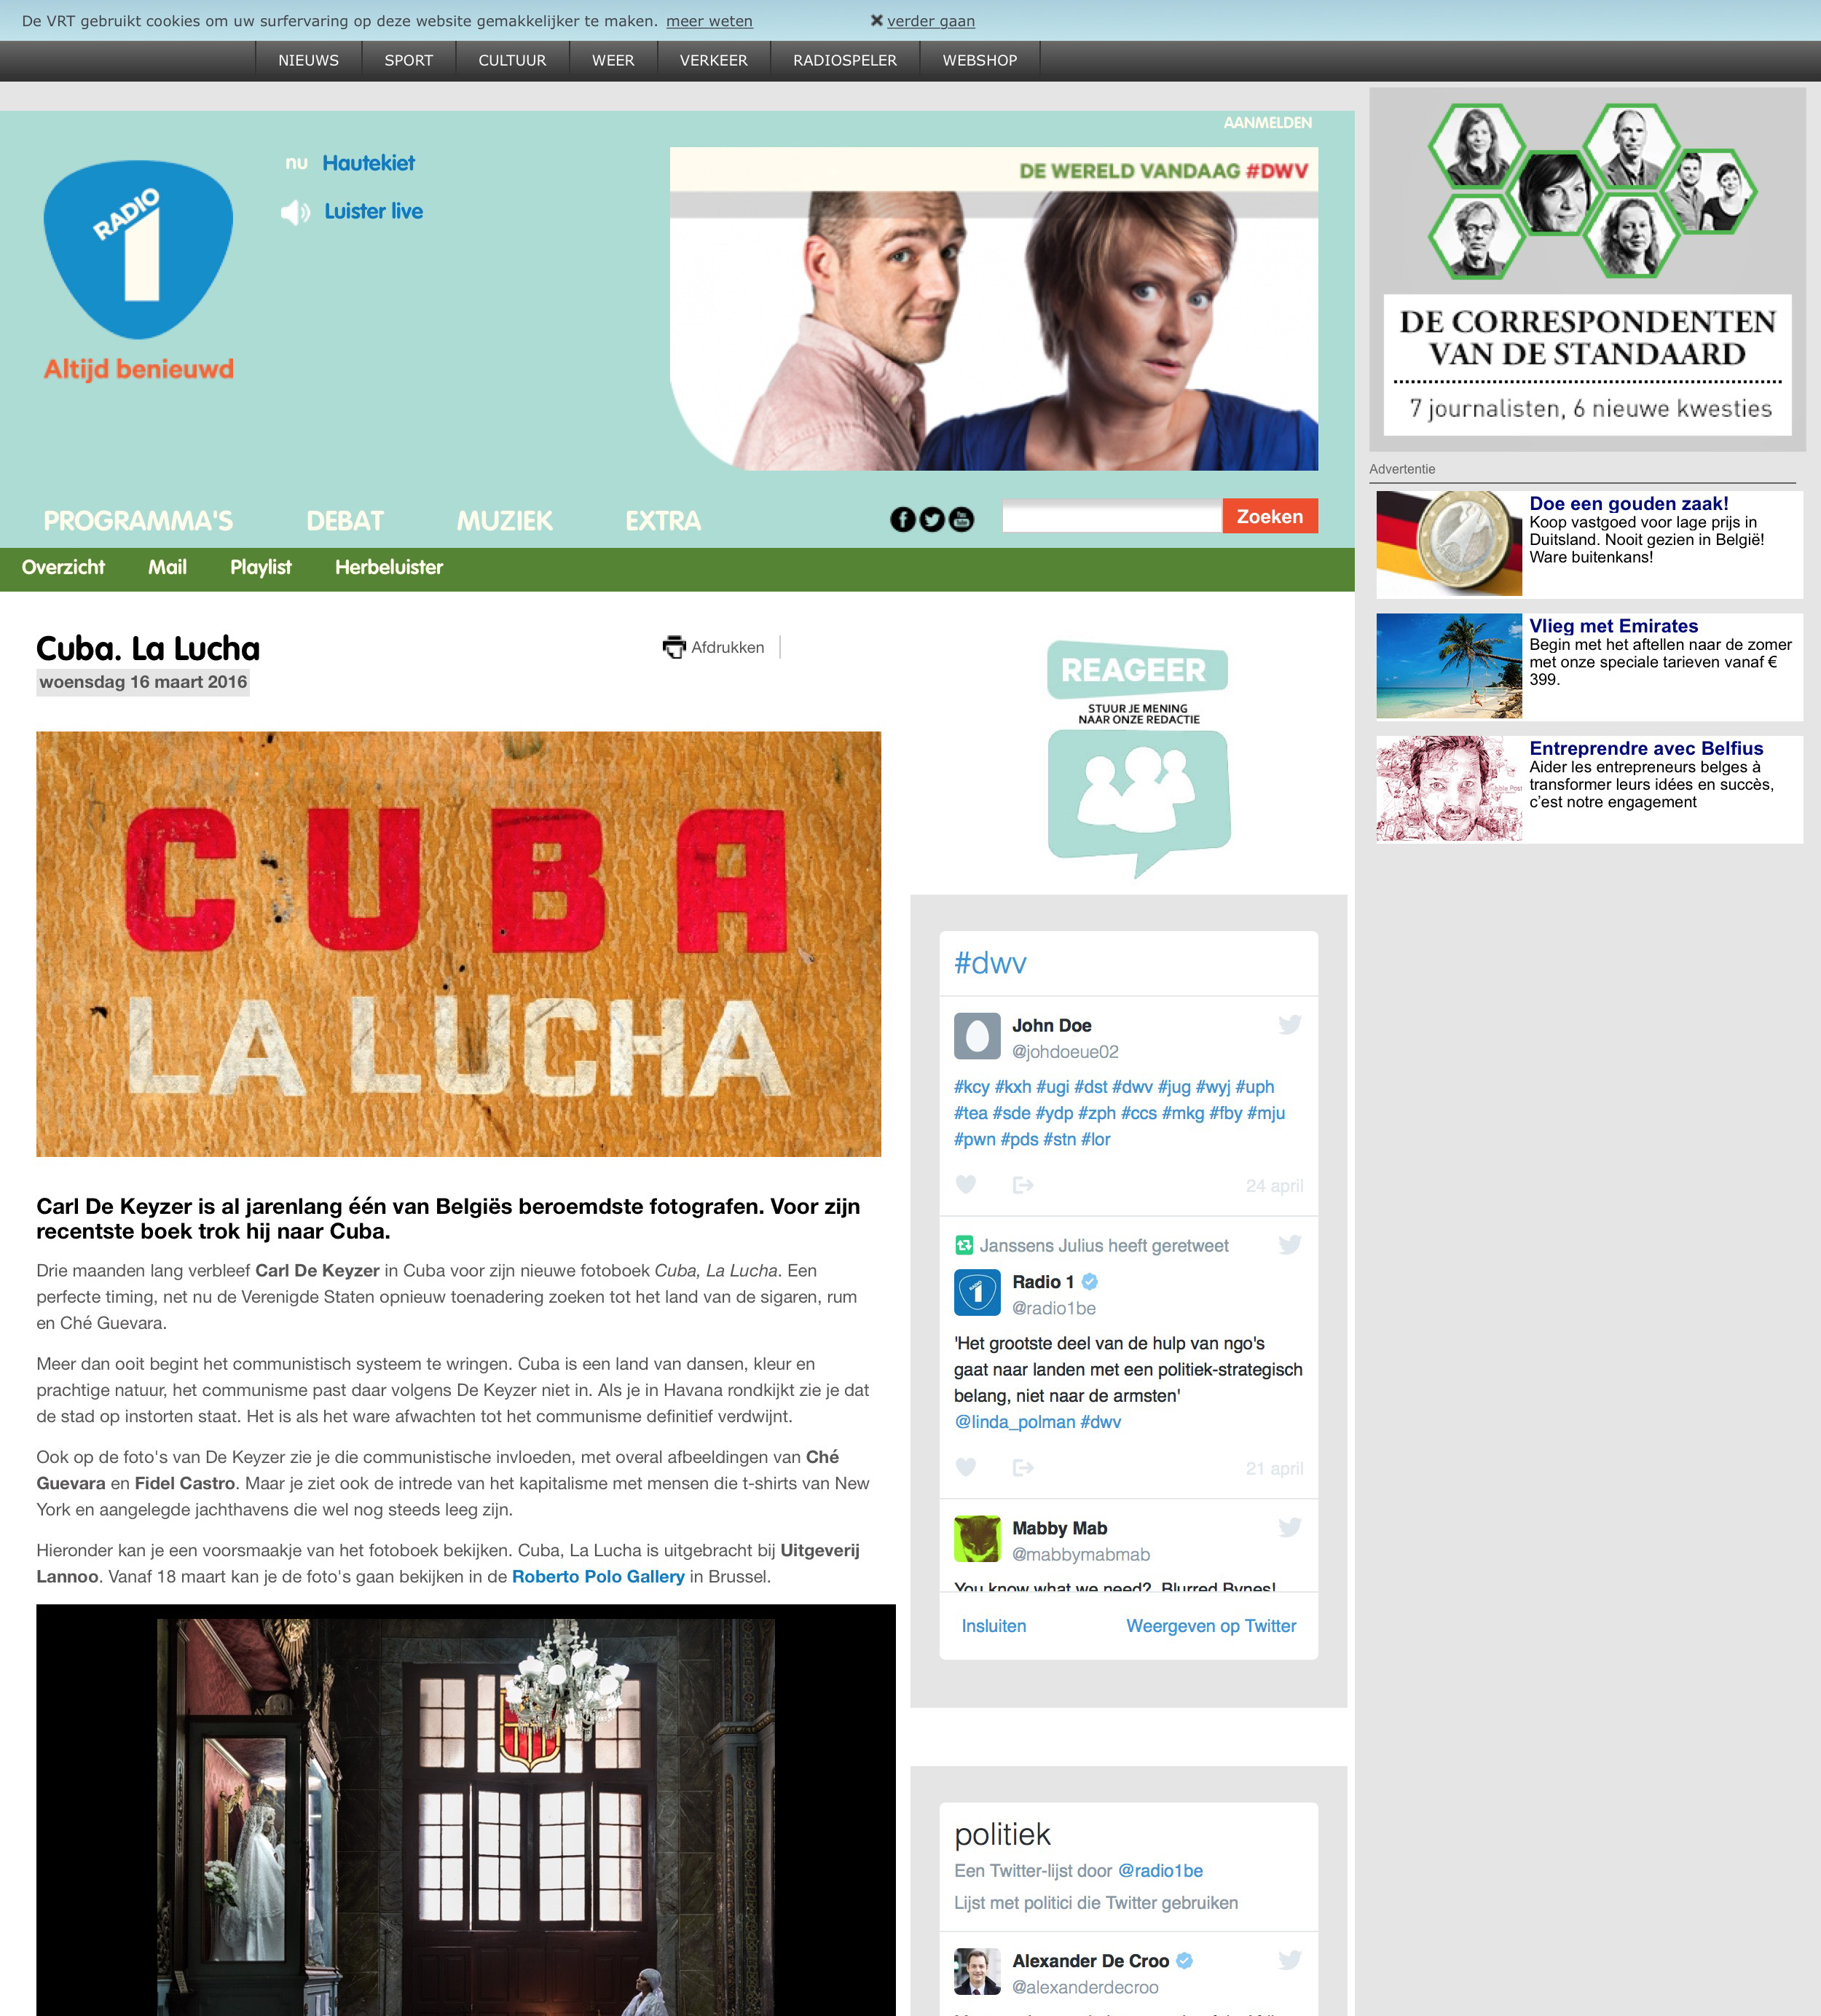 Cuba (Radio 1 VRT)